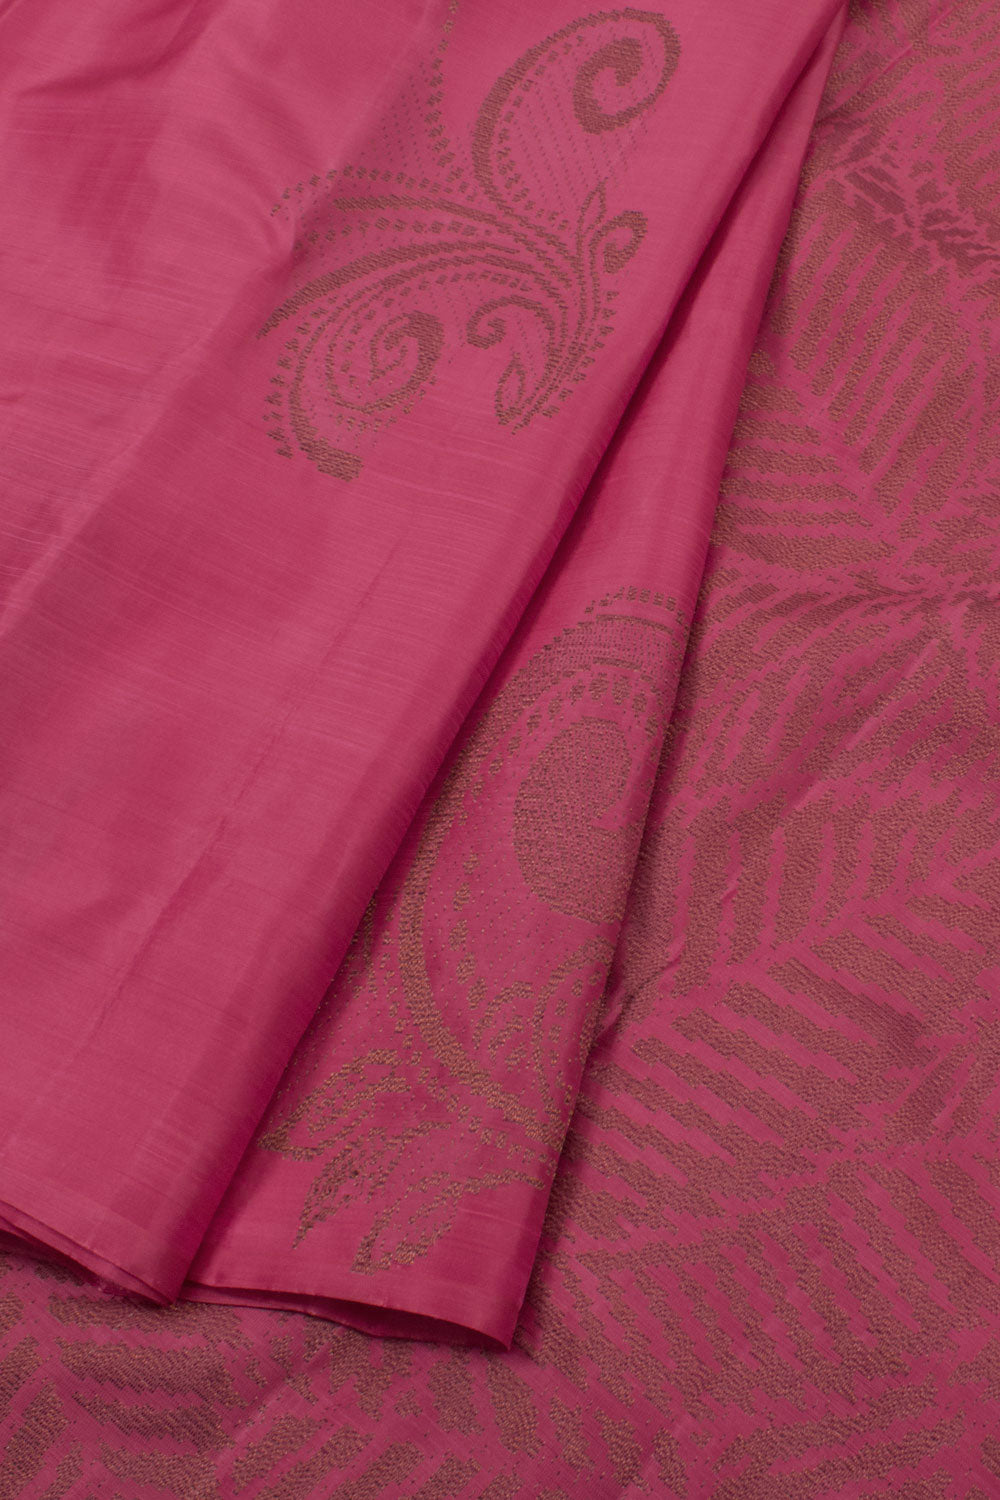 Handloom Borderless Pure Zari Threadwork Kanjivaram Silk Saree 10058349